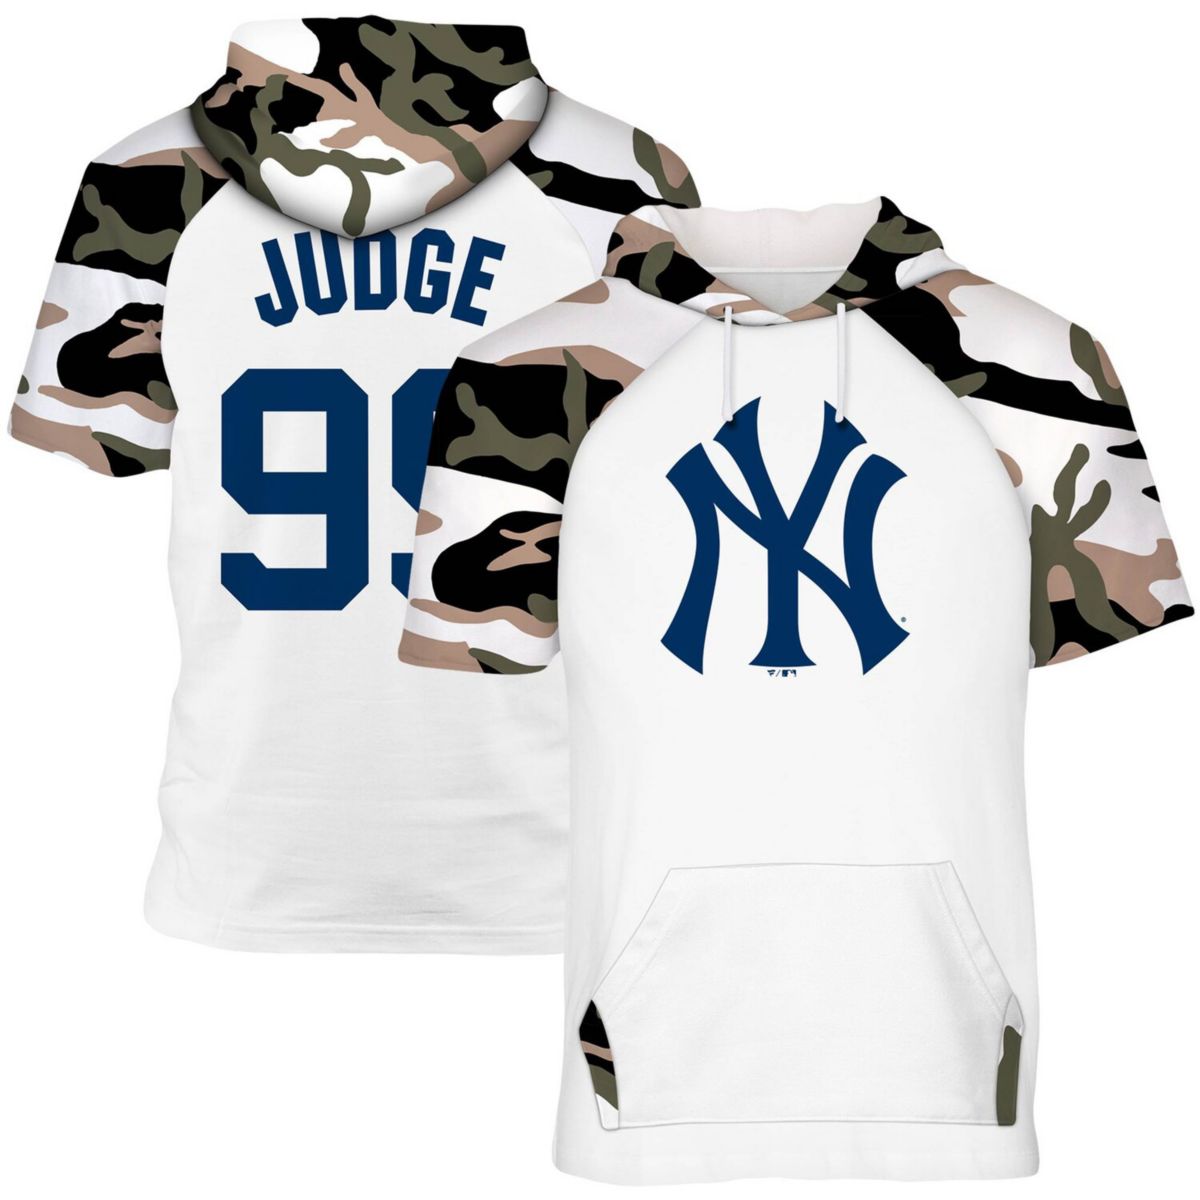 Мужская футболка с капюшоном Aaron Judge белого цвета/камуфляж New York Yankees Player Big & Tall реглан Unbranded